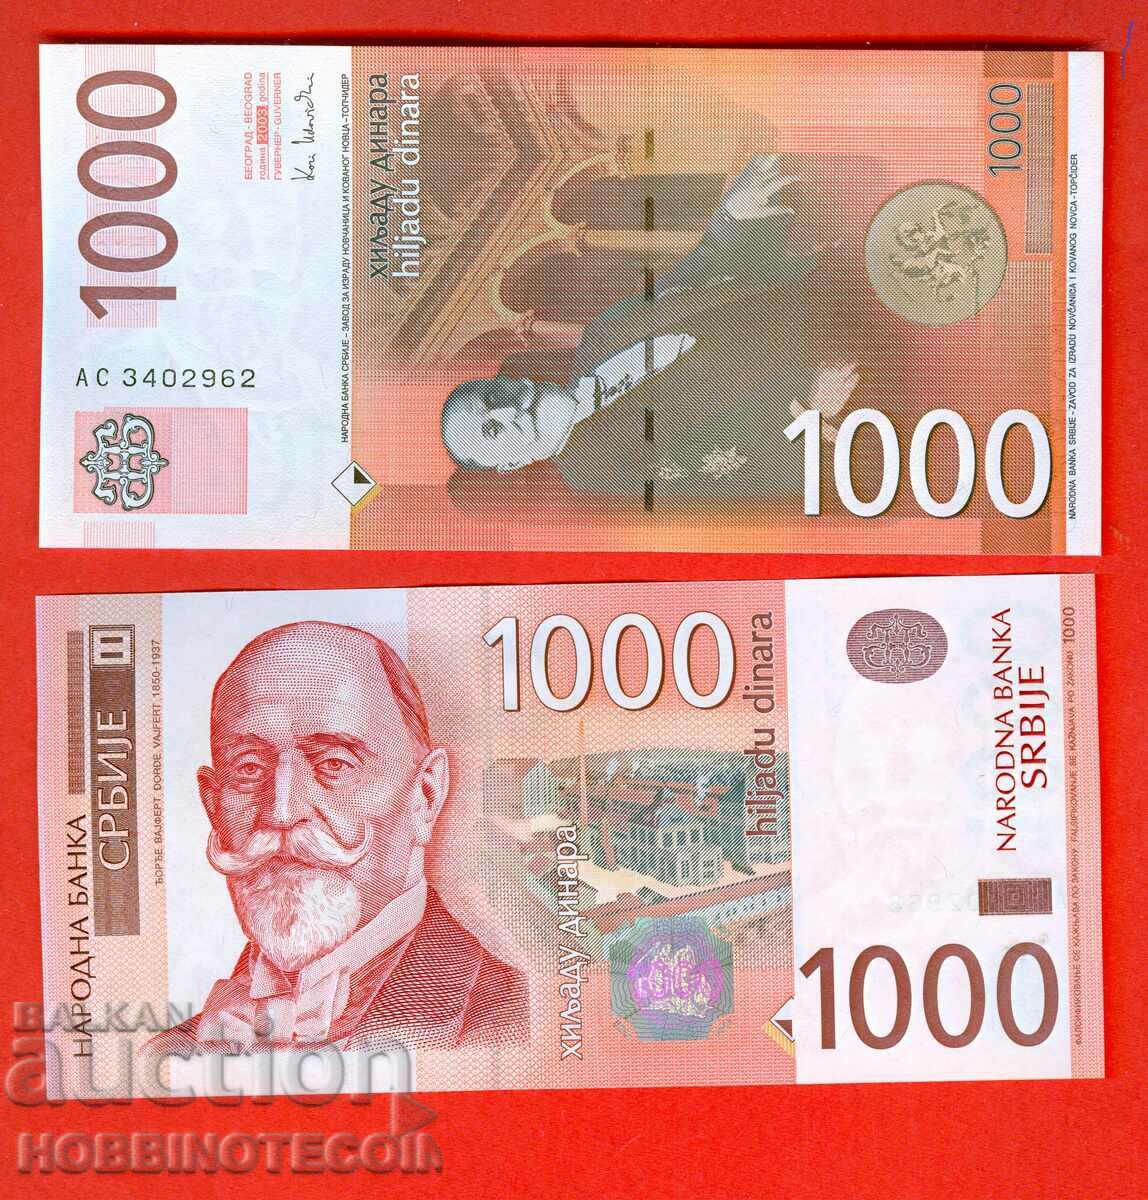 SERBIA SERBIA 1000 - 1000 Dinars issue 2003 NEW UNC